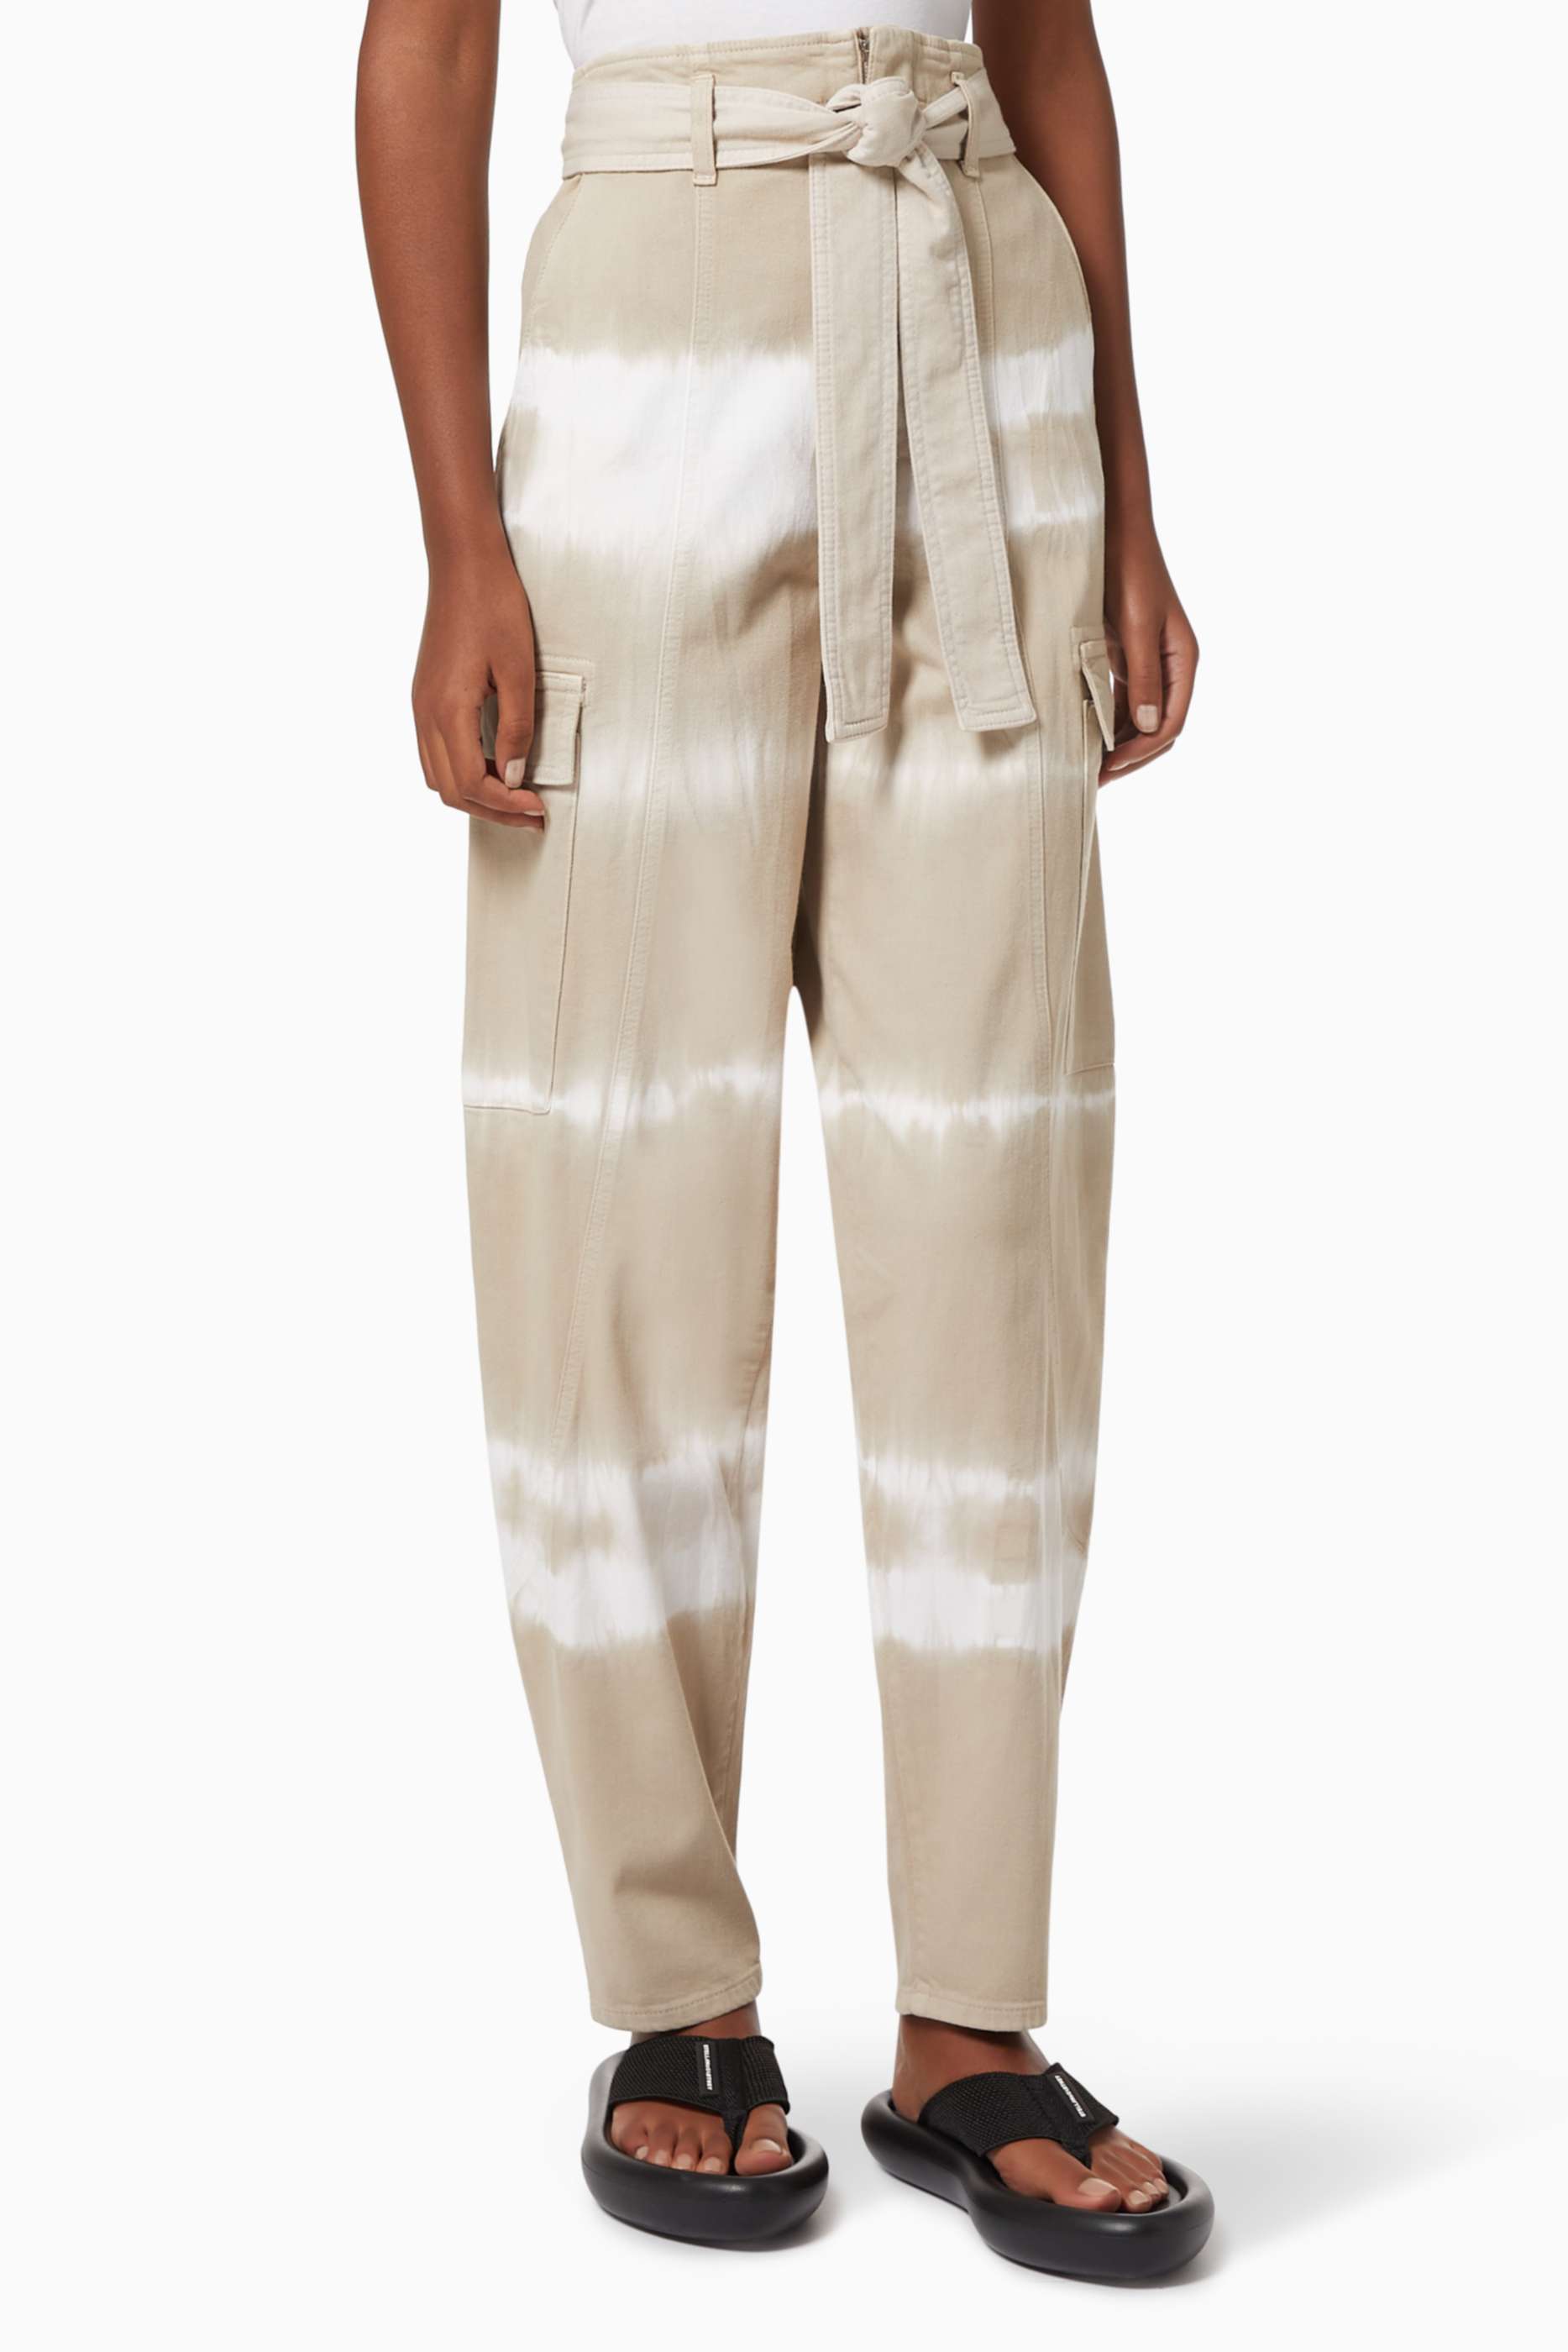 Shop Stella McCartney Neutral Bamboo Safari Tie Dye Pants in 